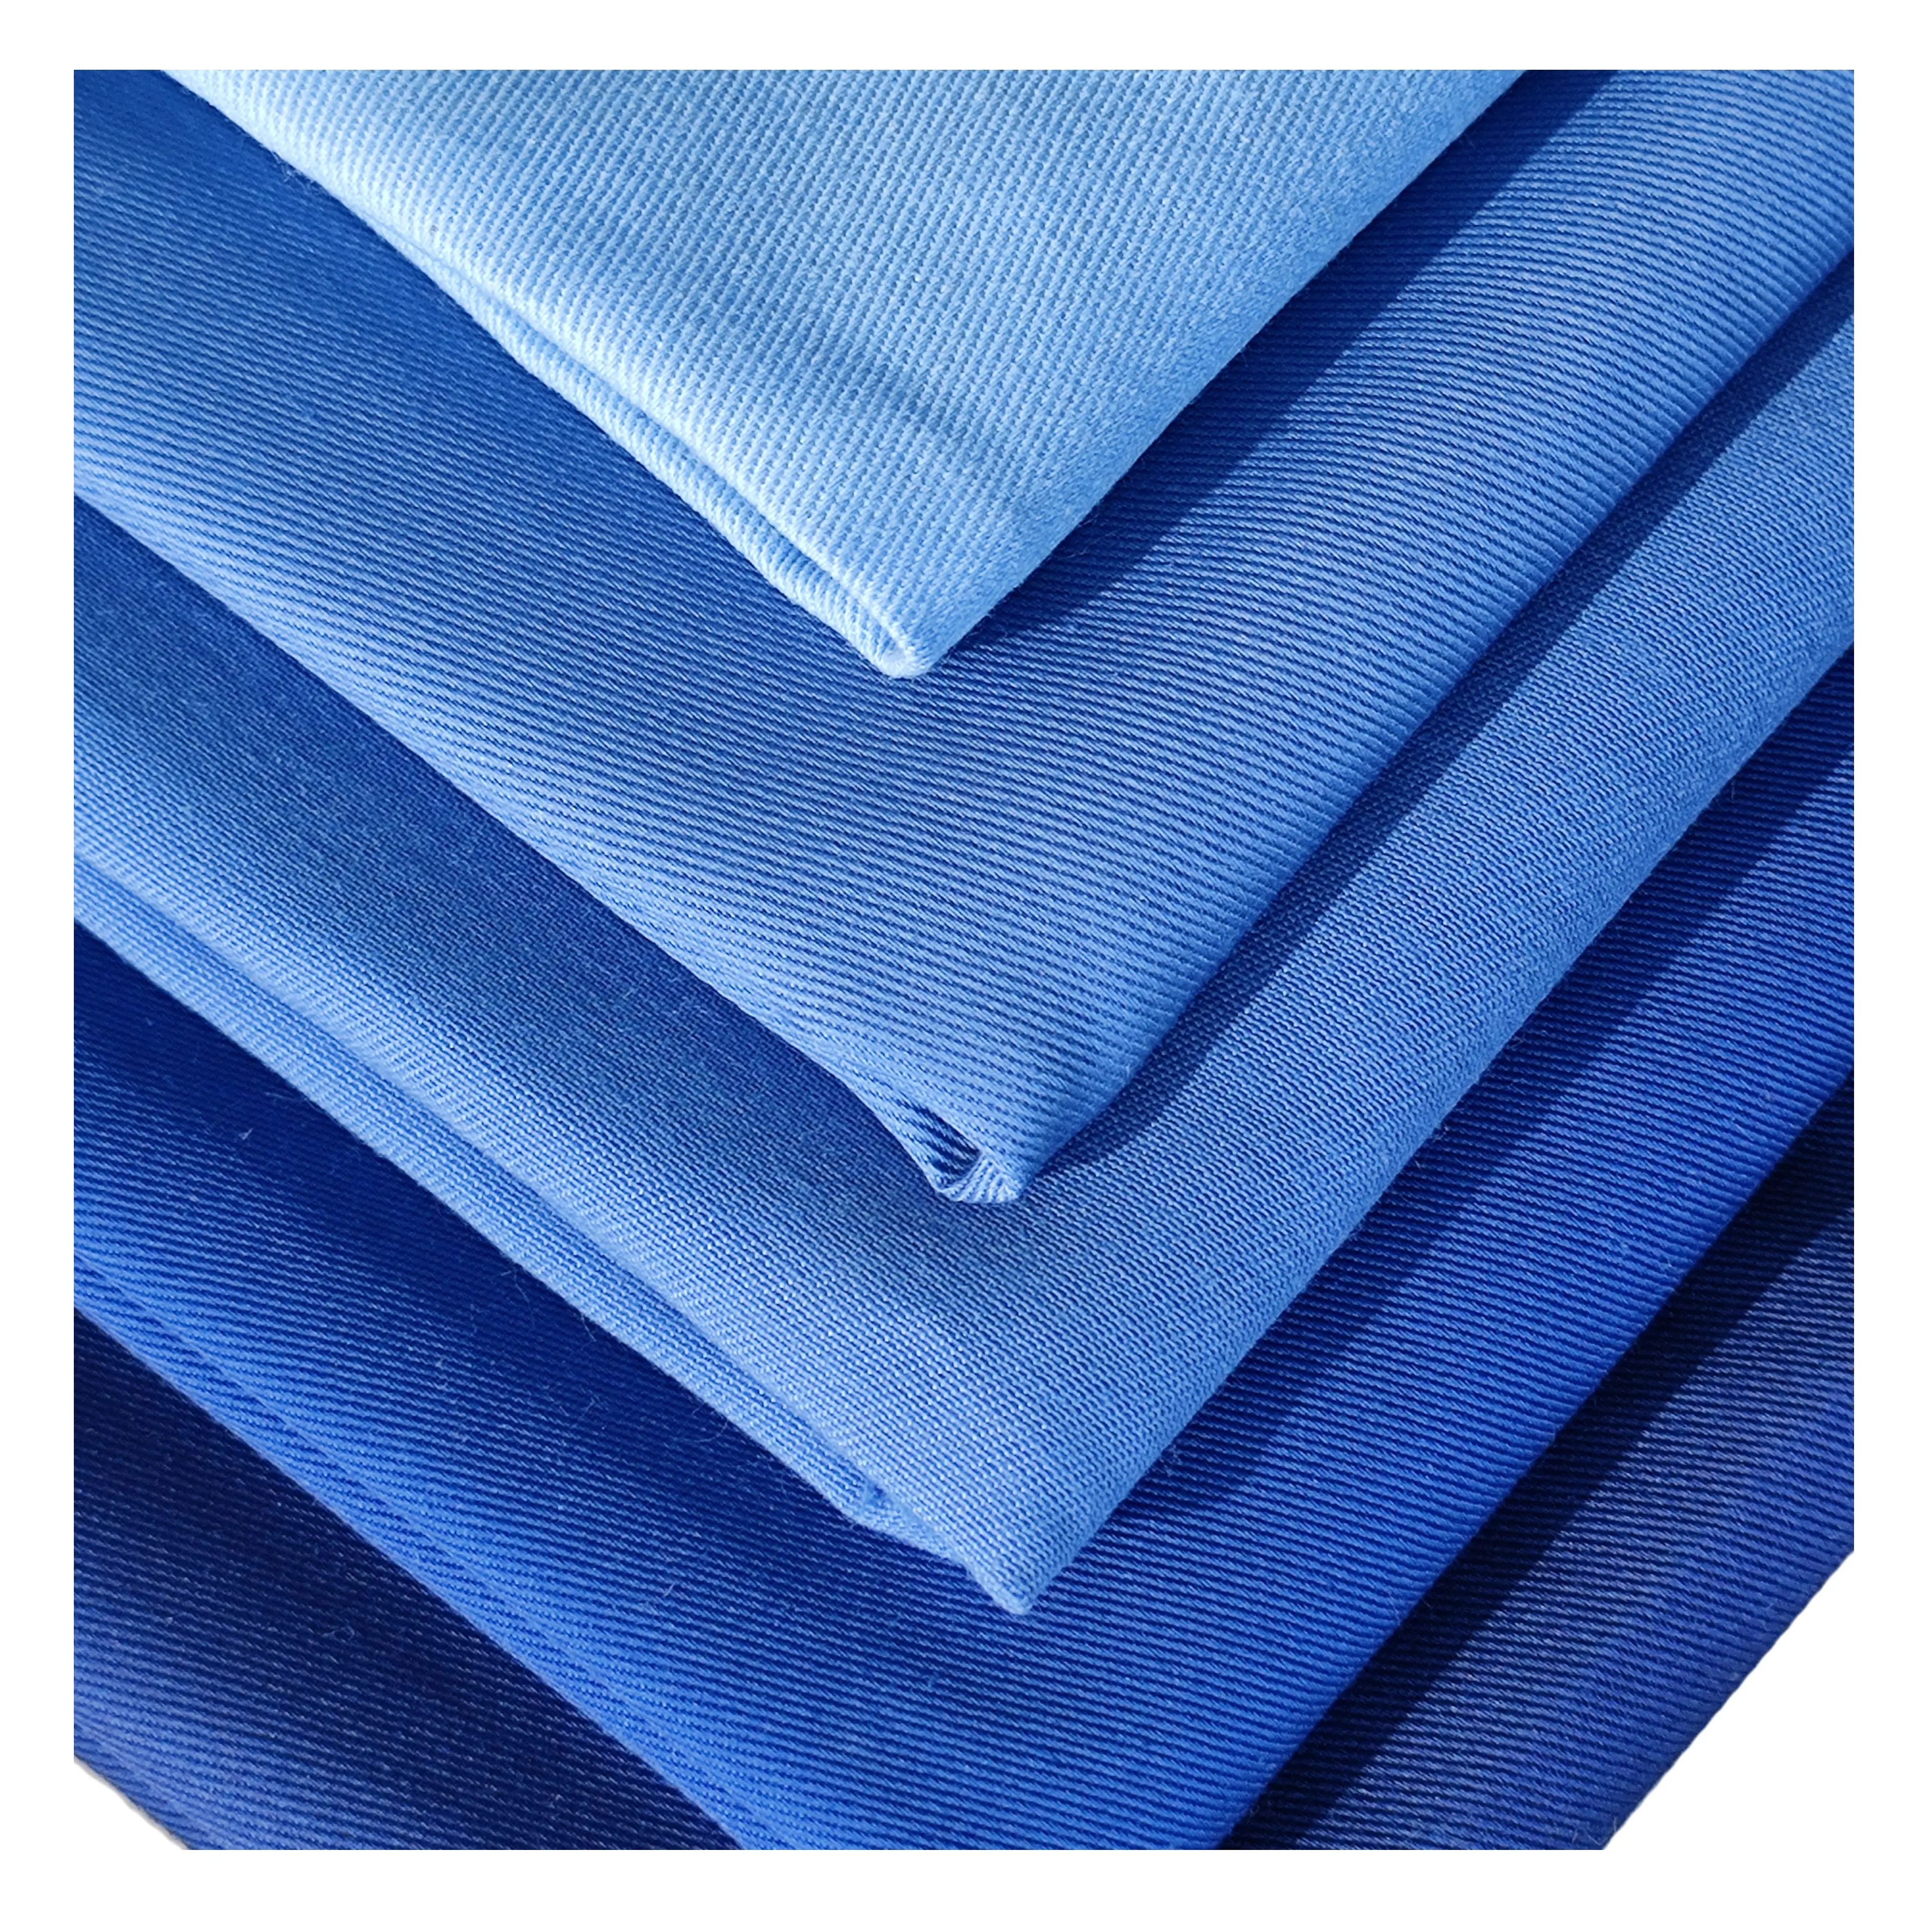 Tissu sergé 65% polyester 35% coton, vente en gros, tissu médical, uniforme d'infirmière